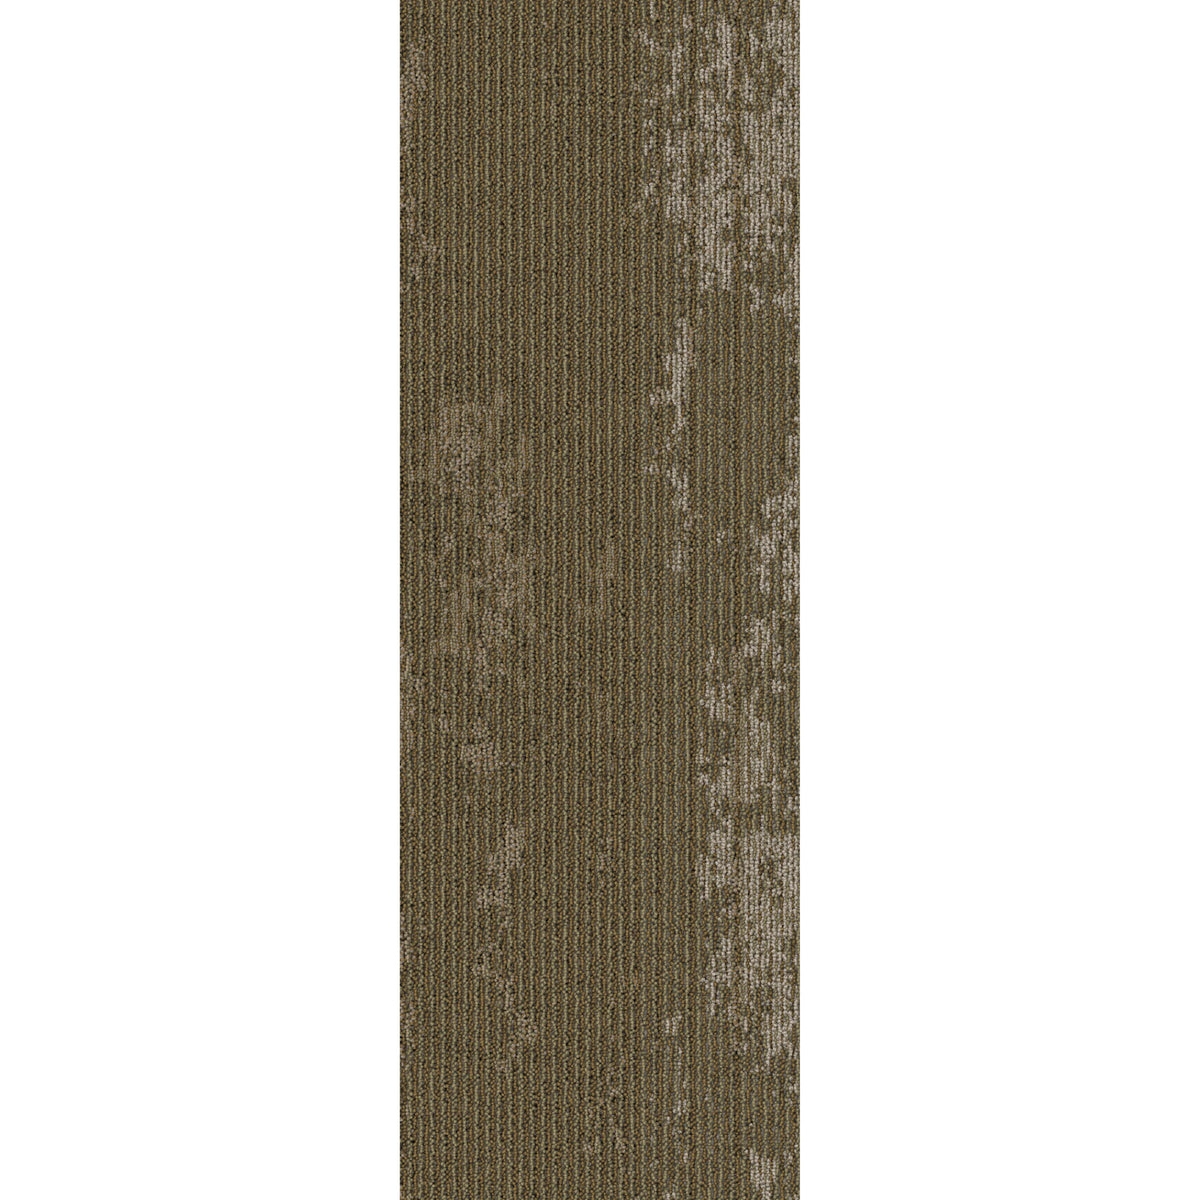 Mohawk Group - Iconic Earth - Metalmorphic - Carpet Tile - Rugged Range Metalli